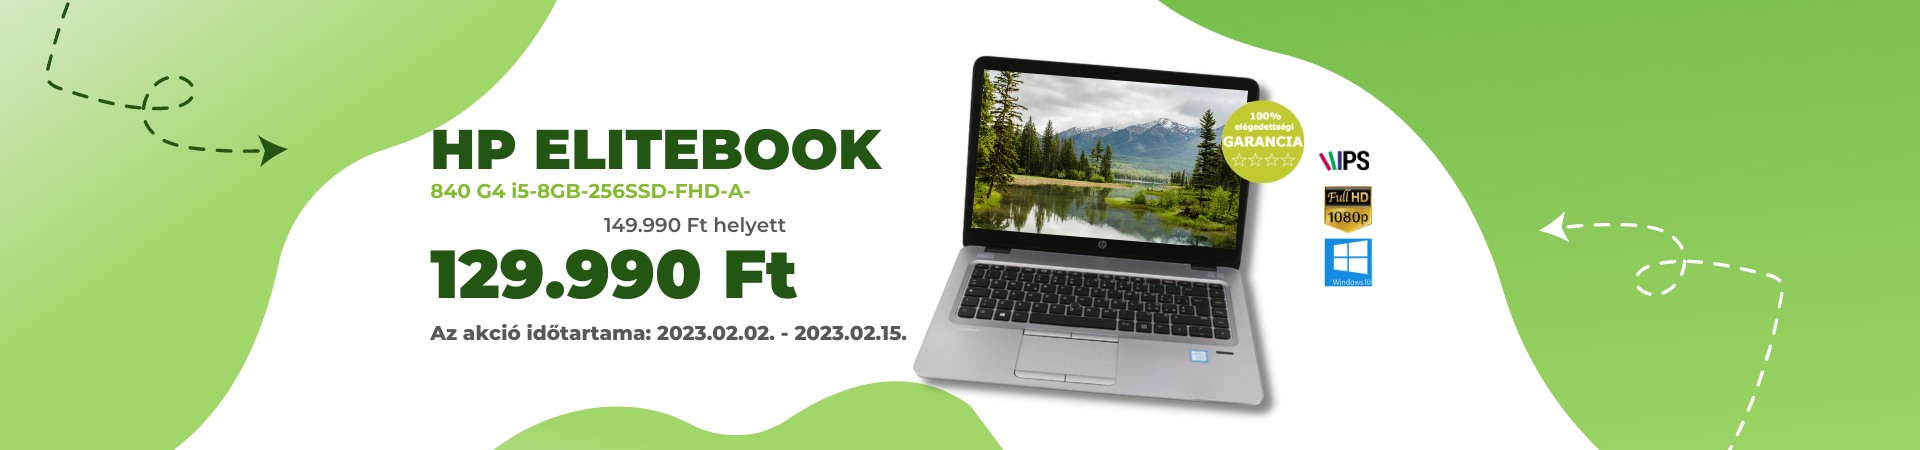 hp-elitebook-840-g4-hasznalt-laptop-akcio